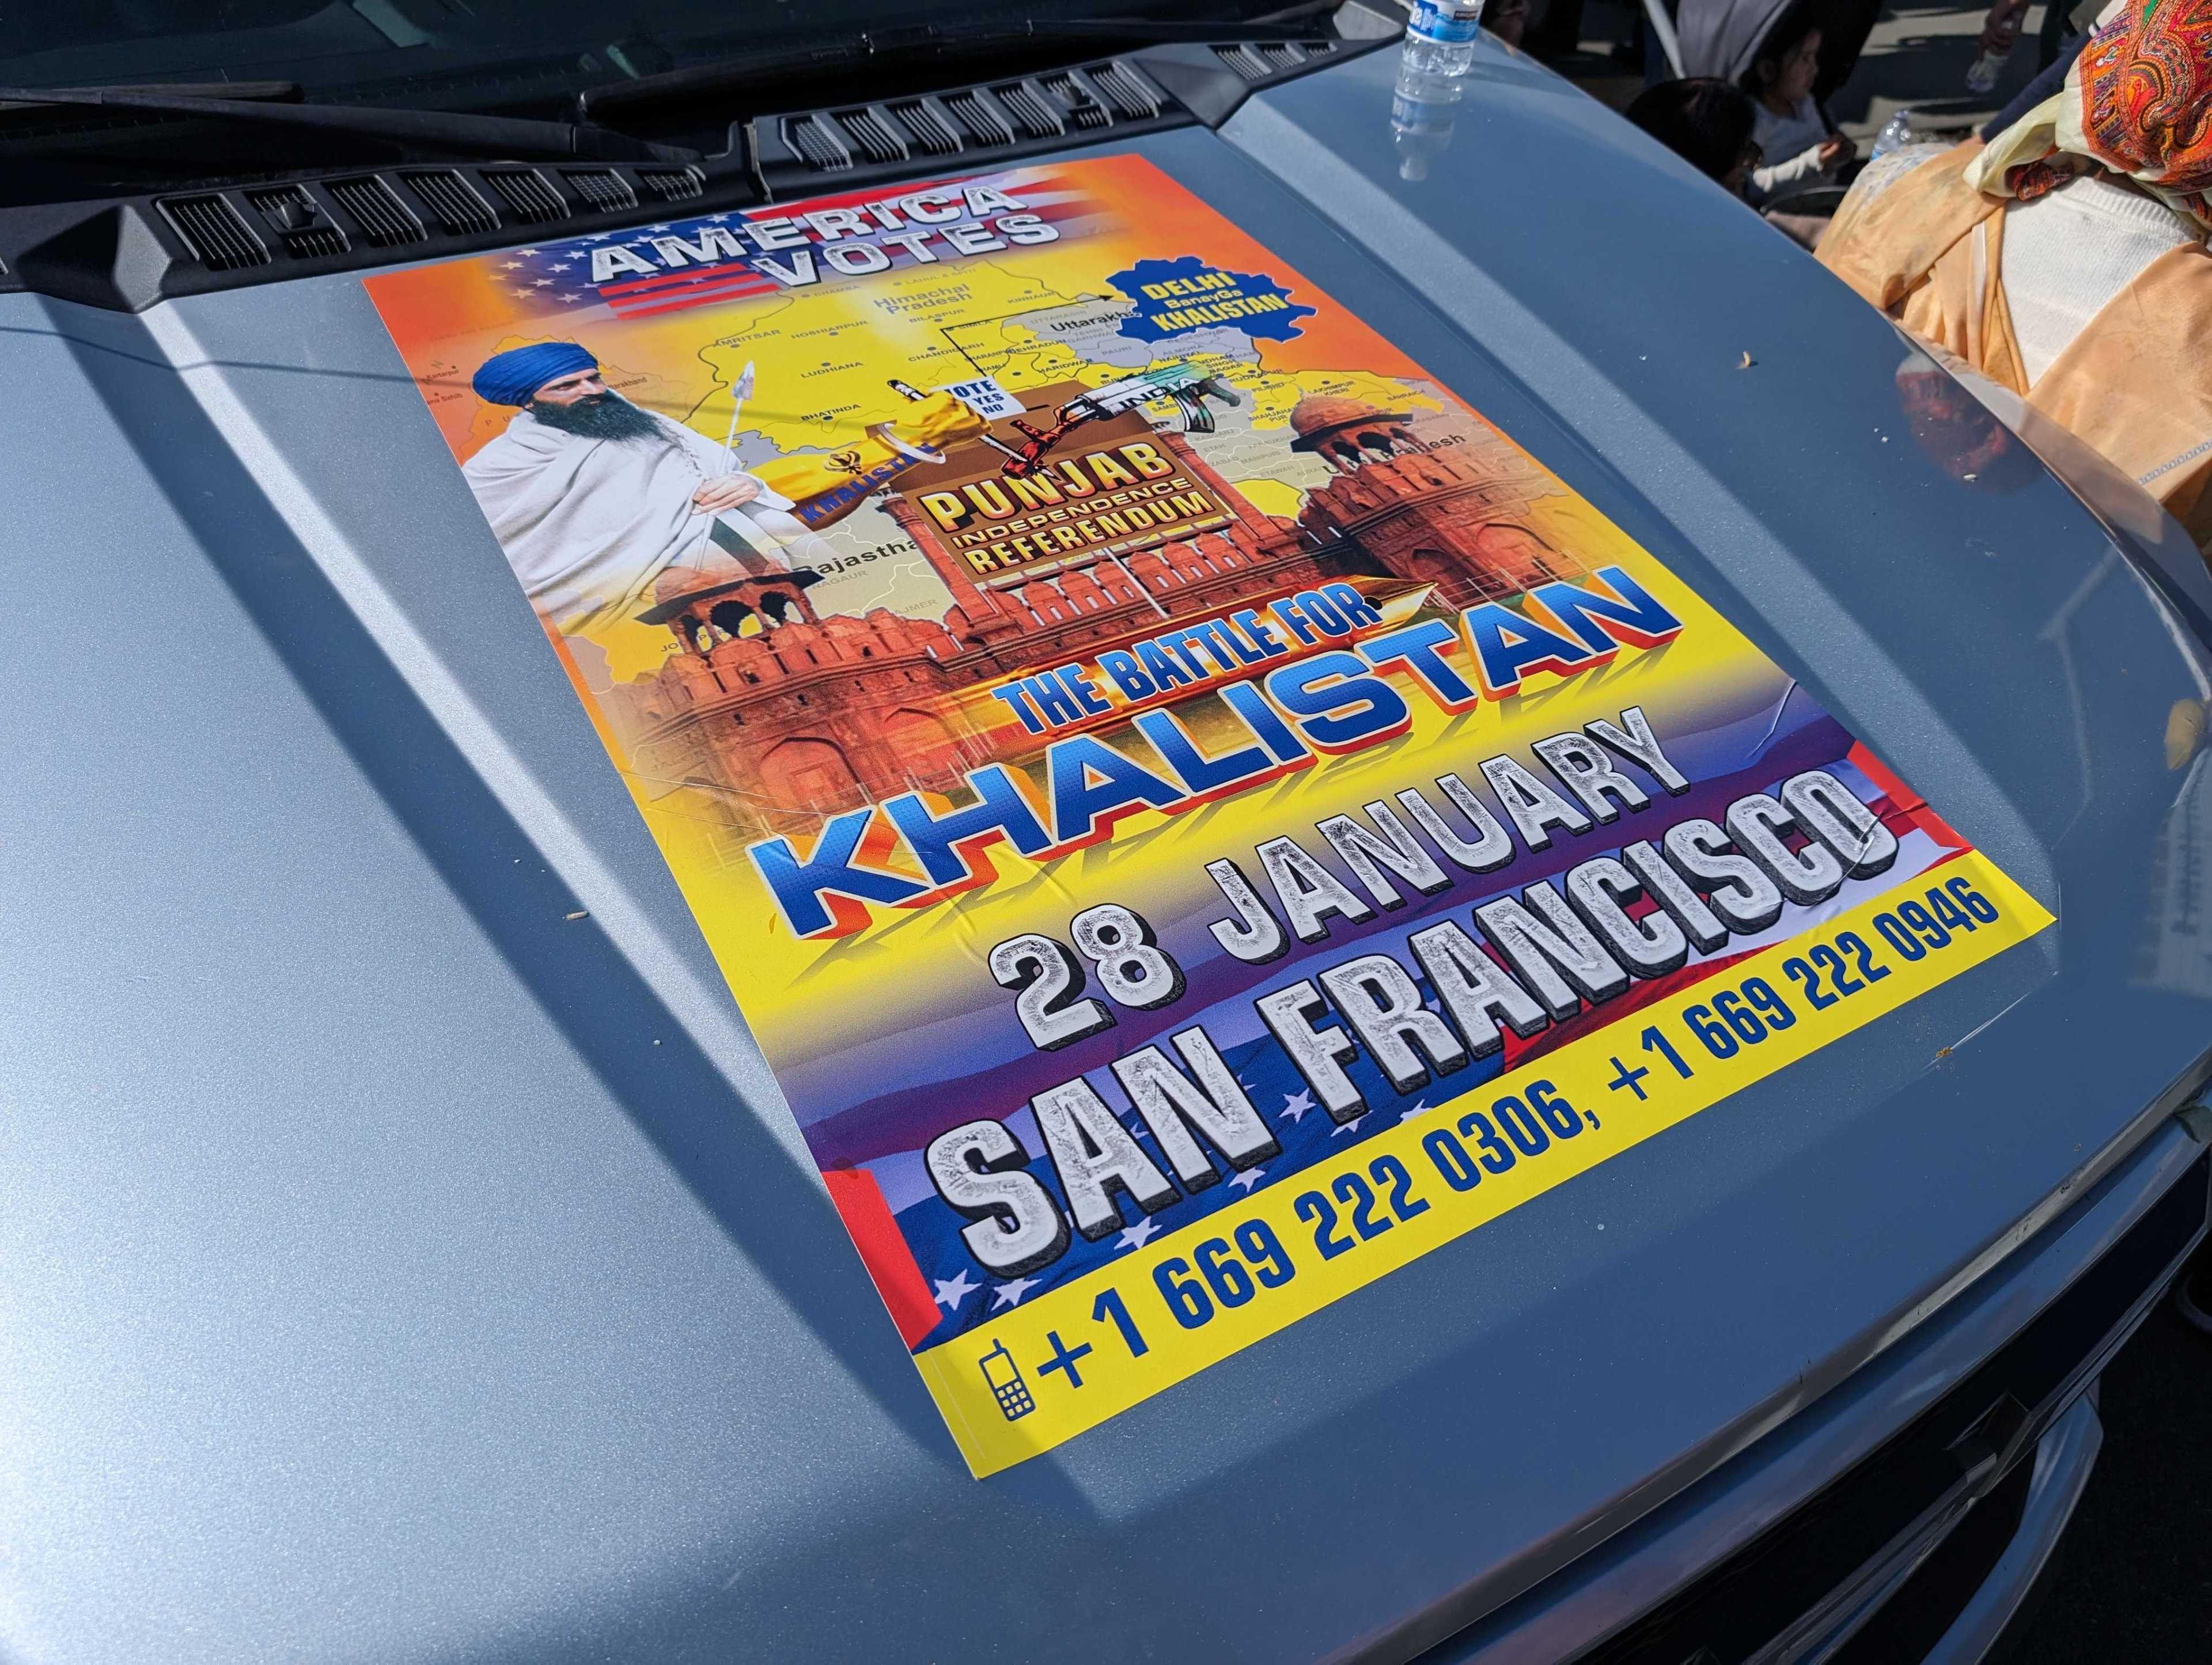 A vinyl decal atop a vehicle's hood advertises a Punjab independence referendum